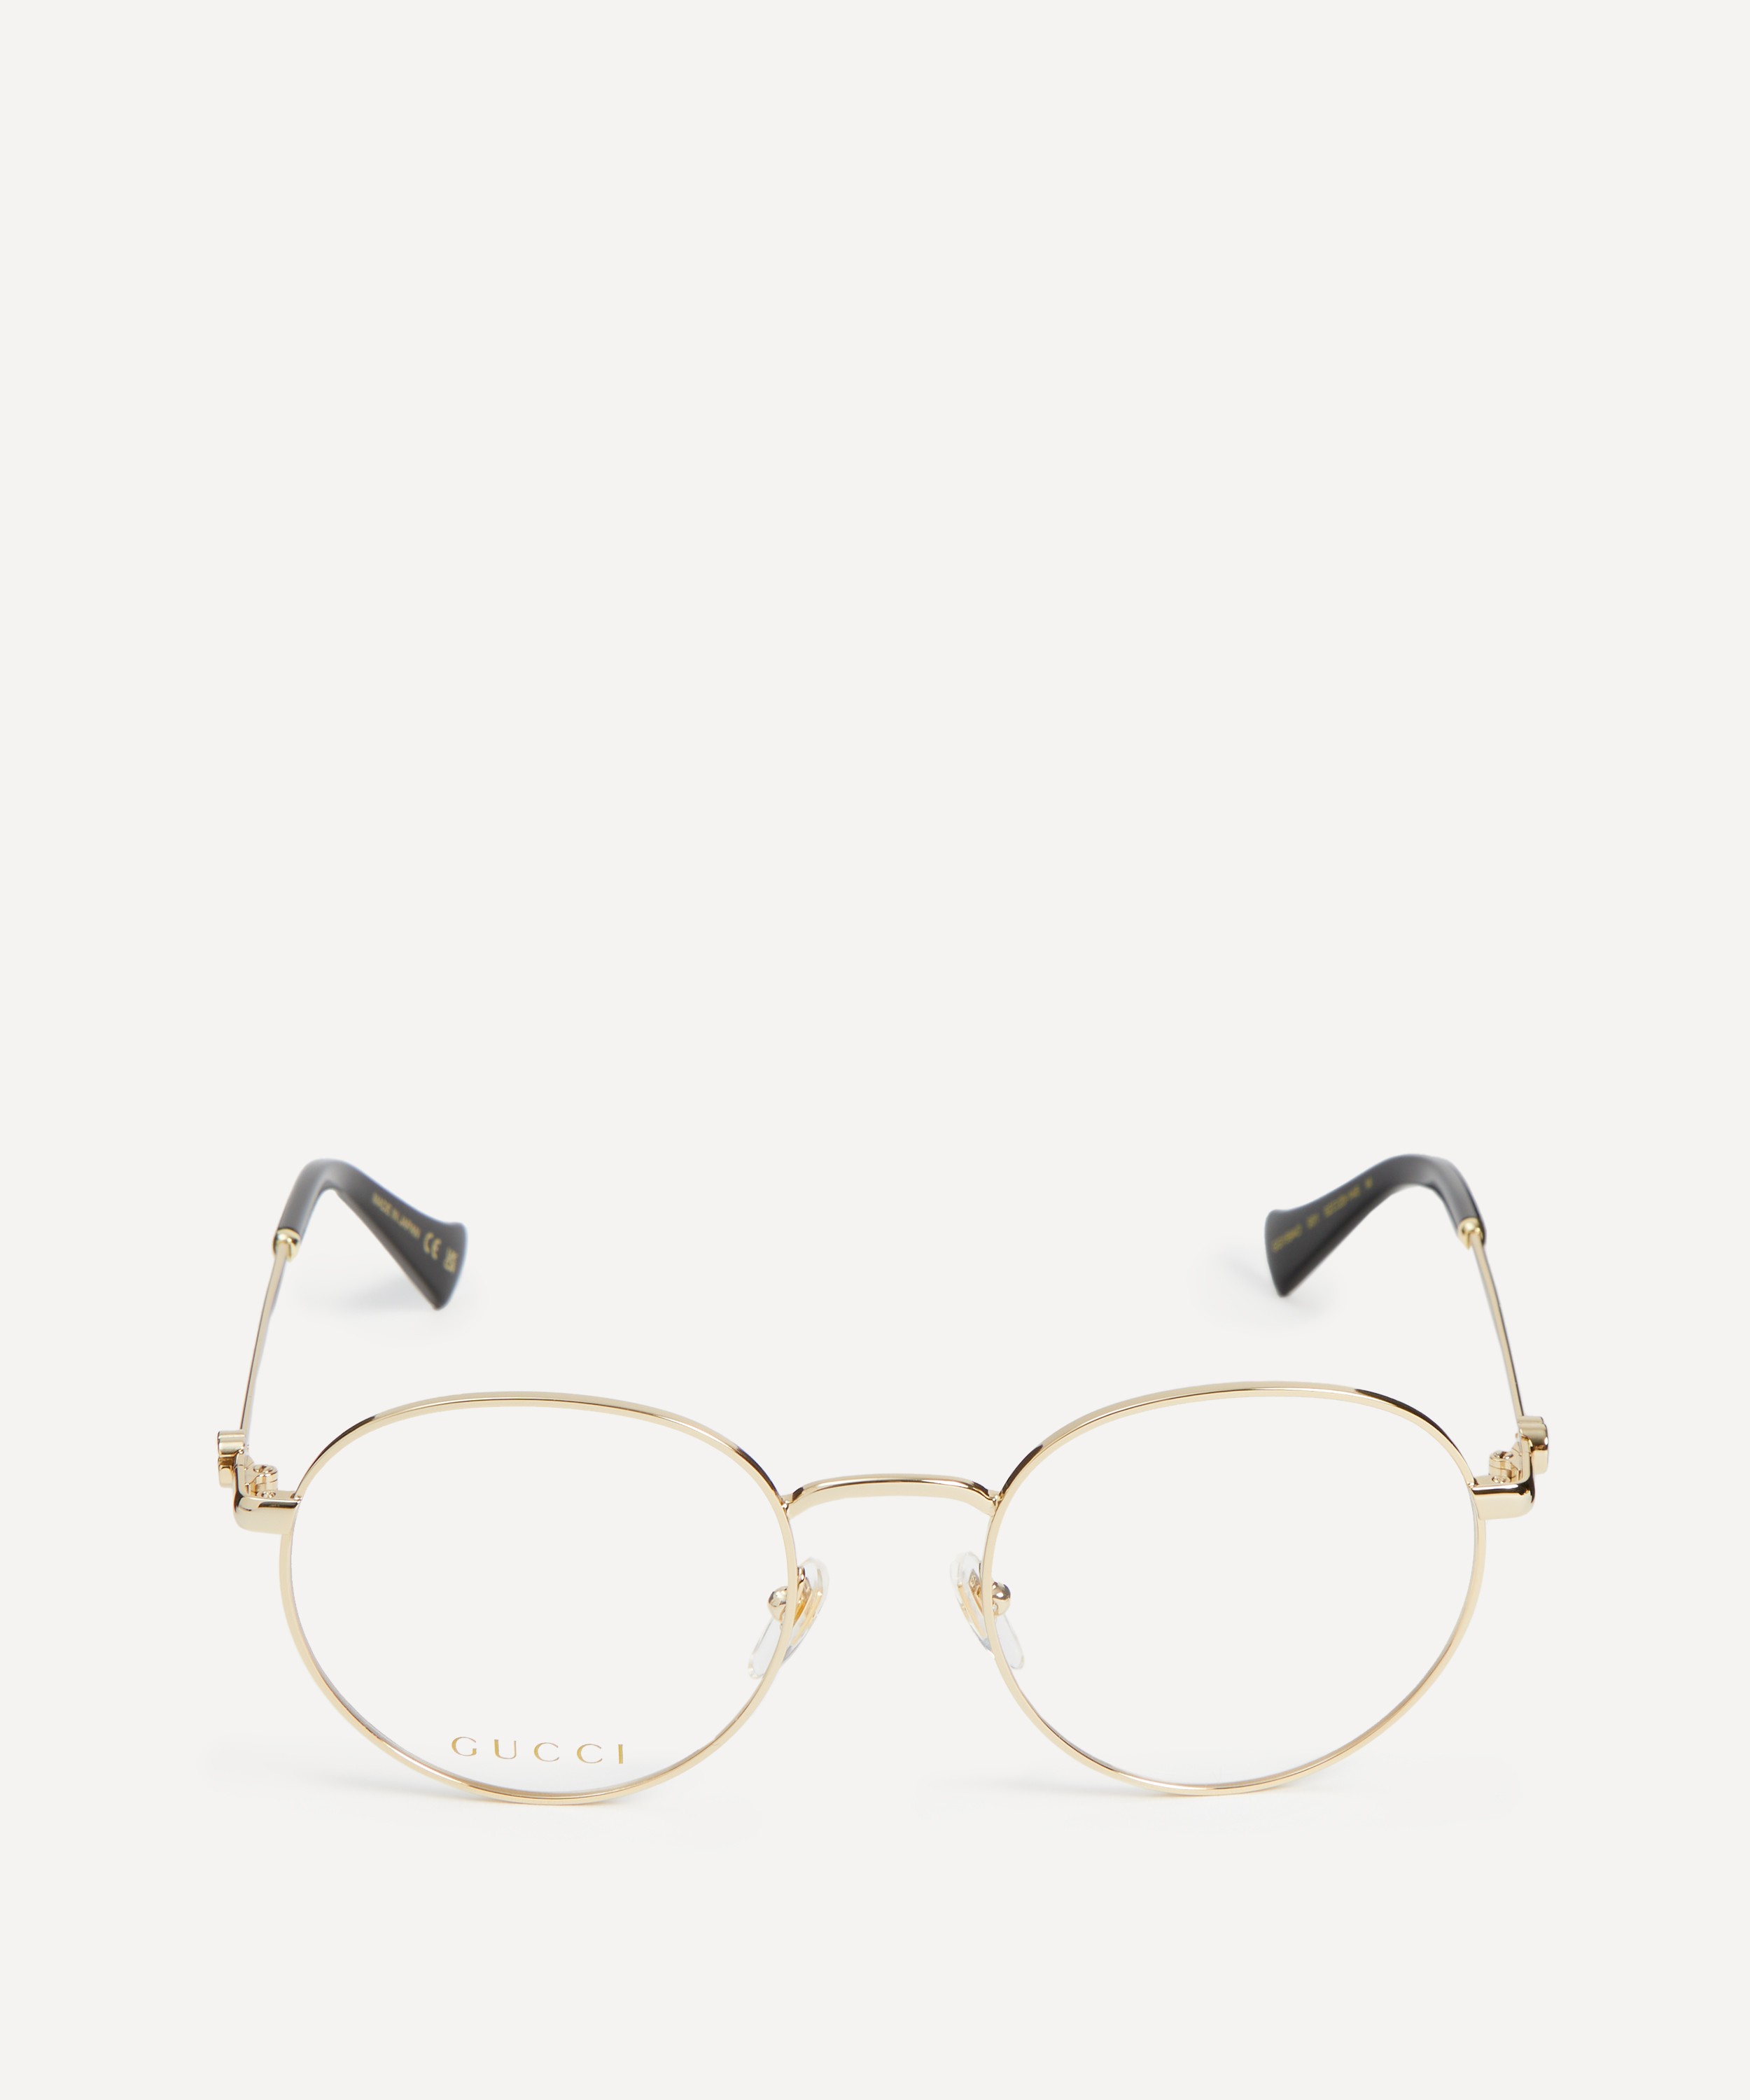 Gucci - Round Optical Glasses